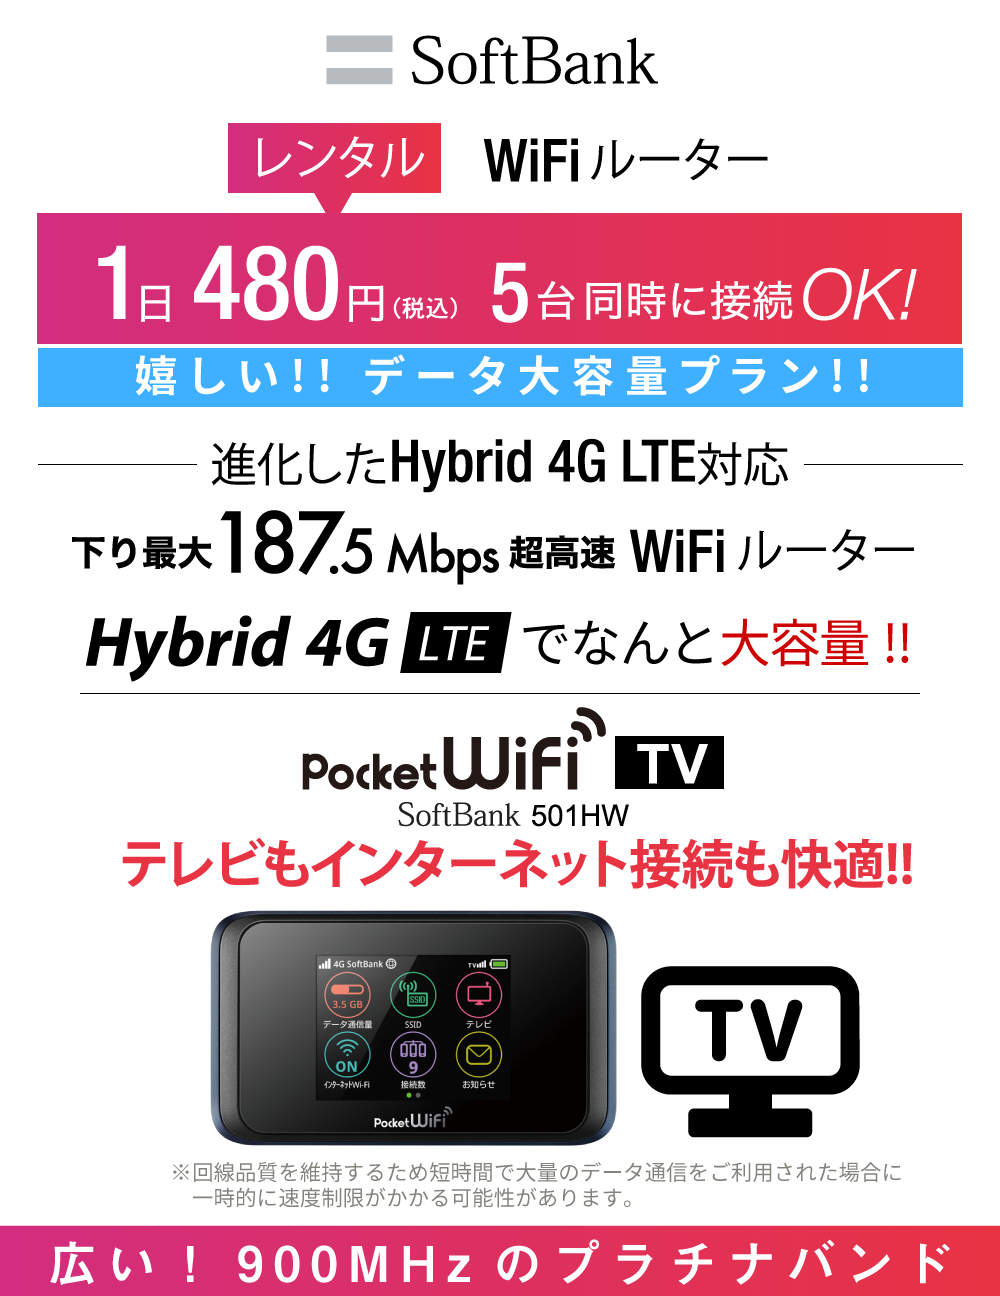 Pocket WiFi SoftBank 501HW